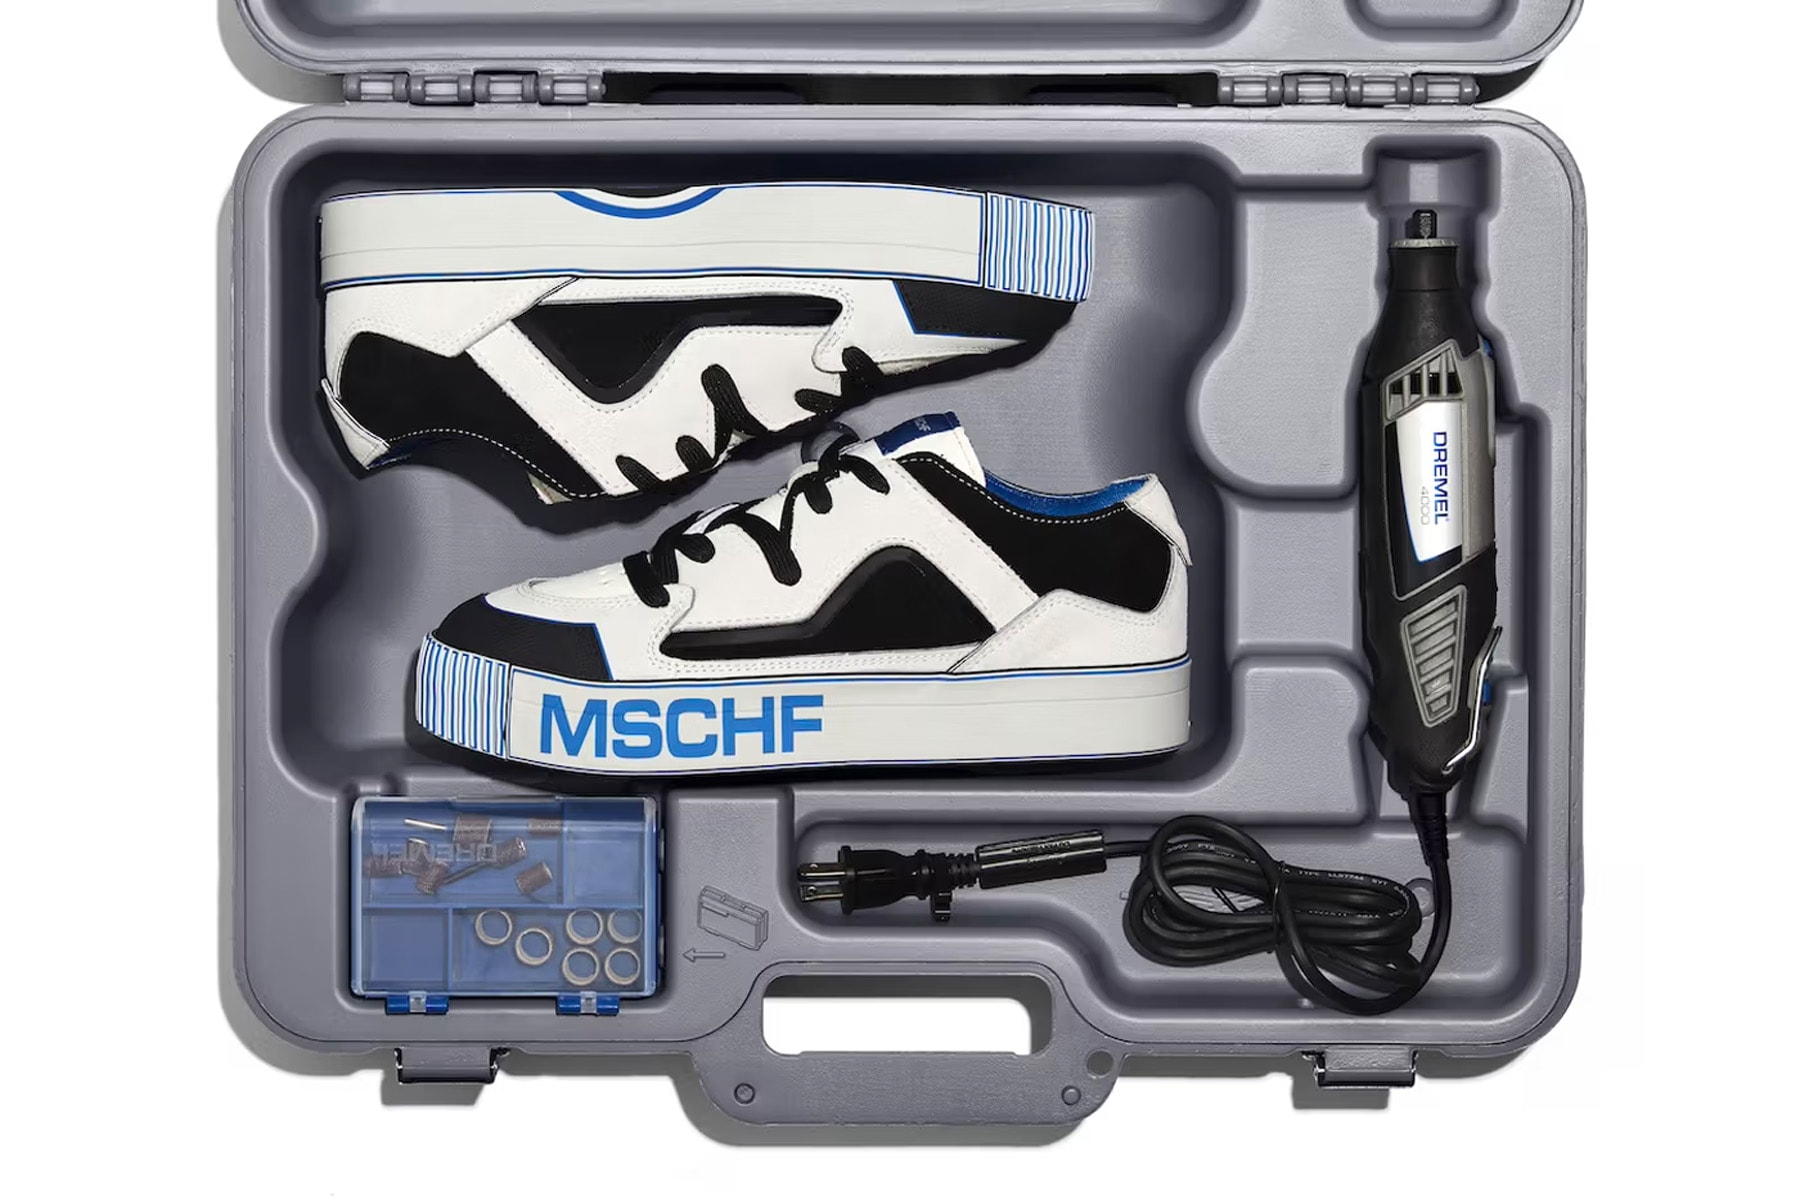 Dremel x MSCHF Gobstomper 全新聯名鞋款正式登場